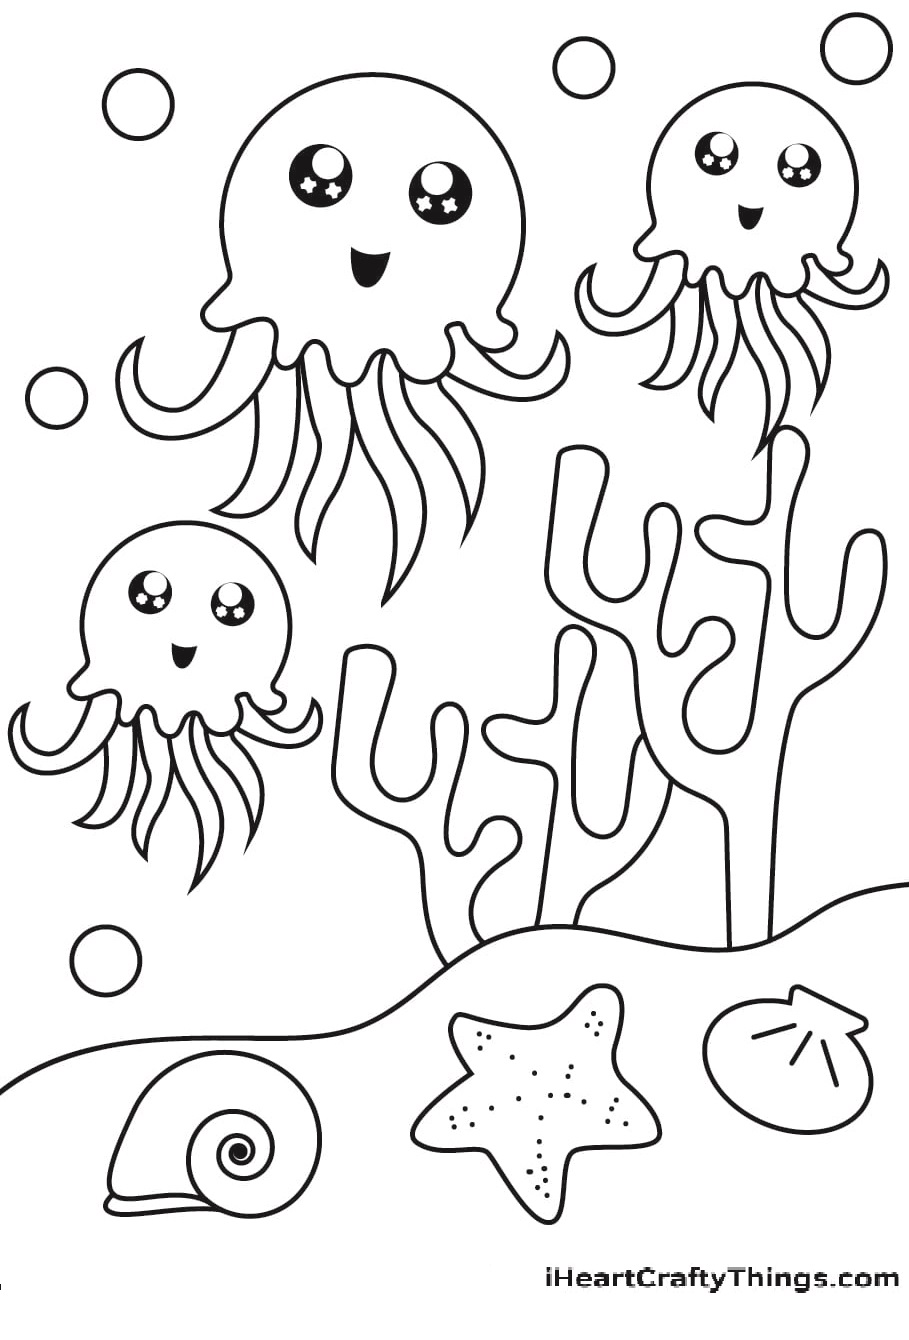 Cute Jellyfish Image